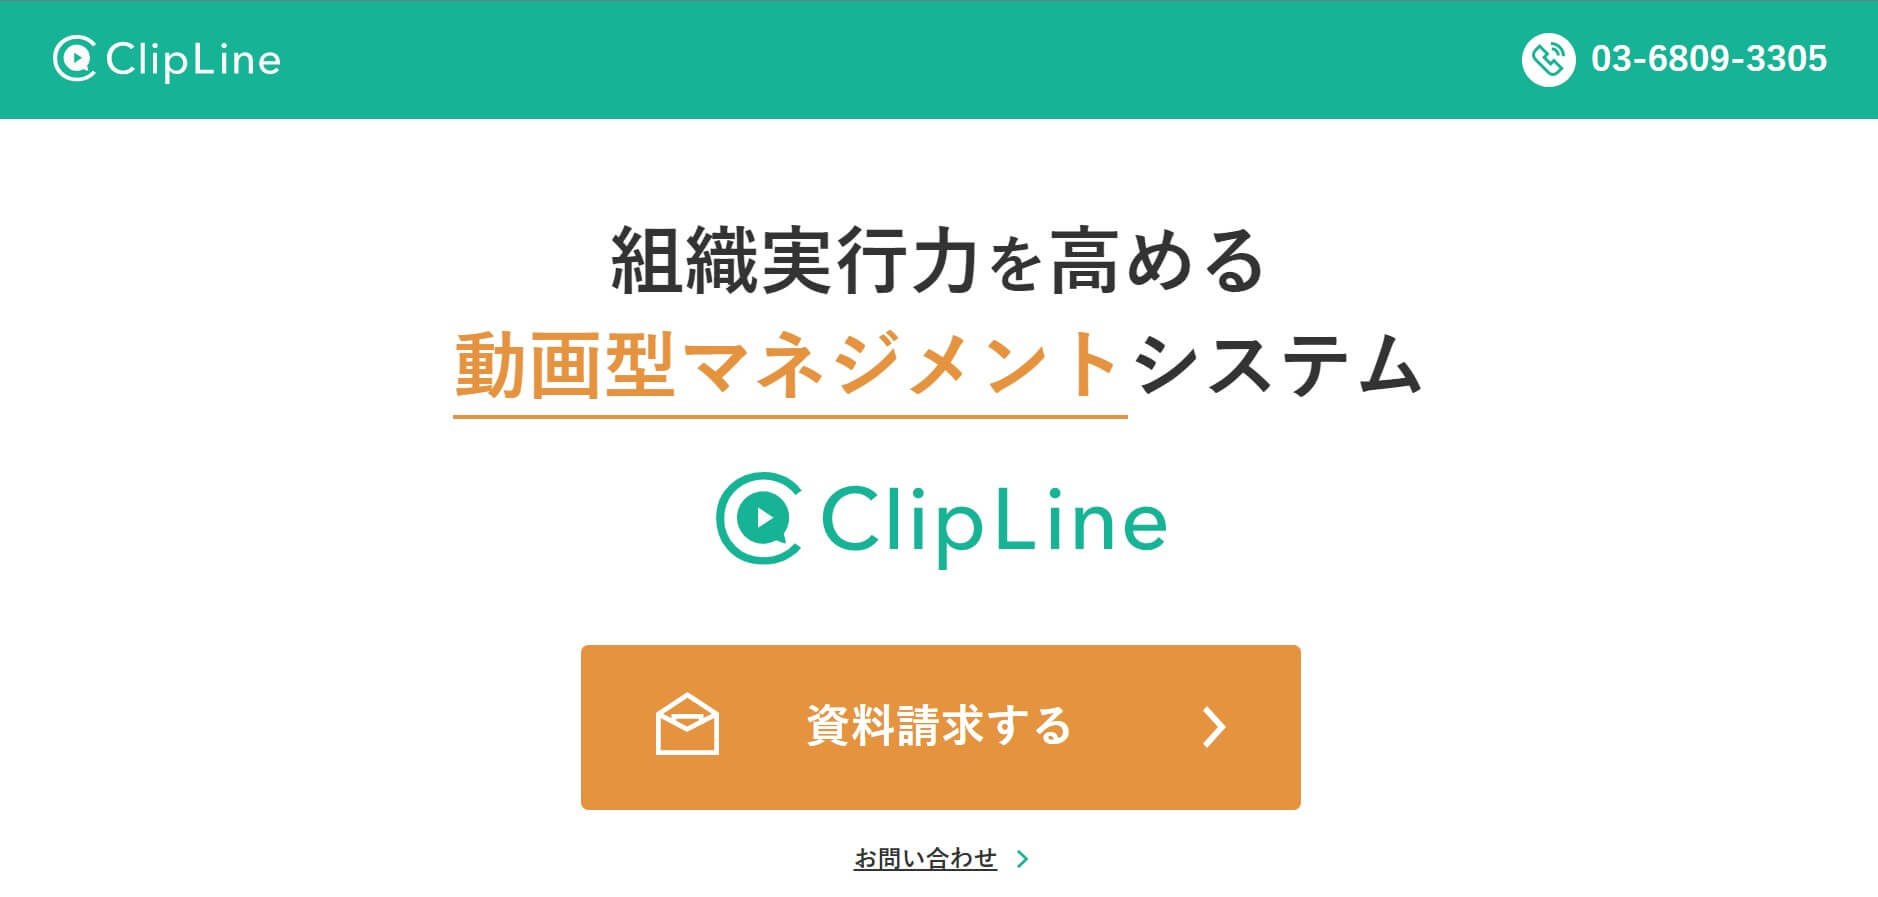 clipline